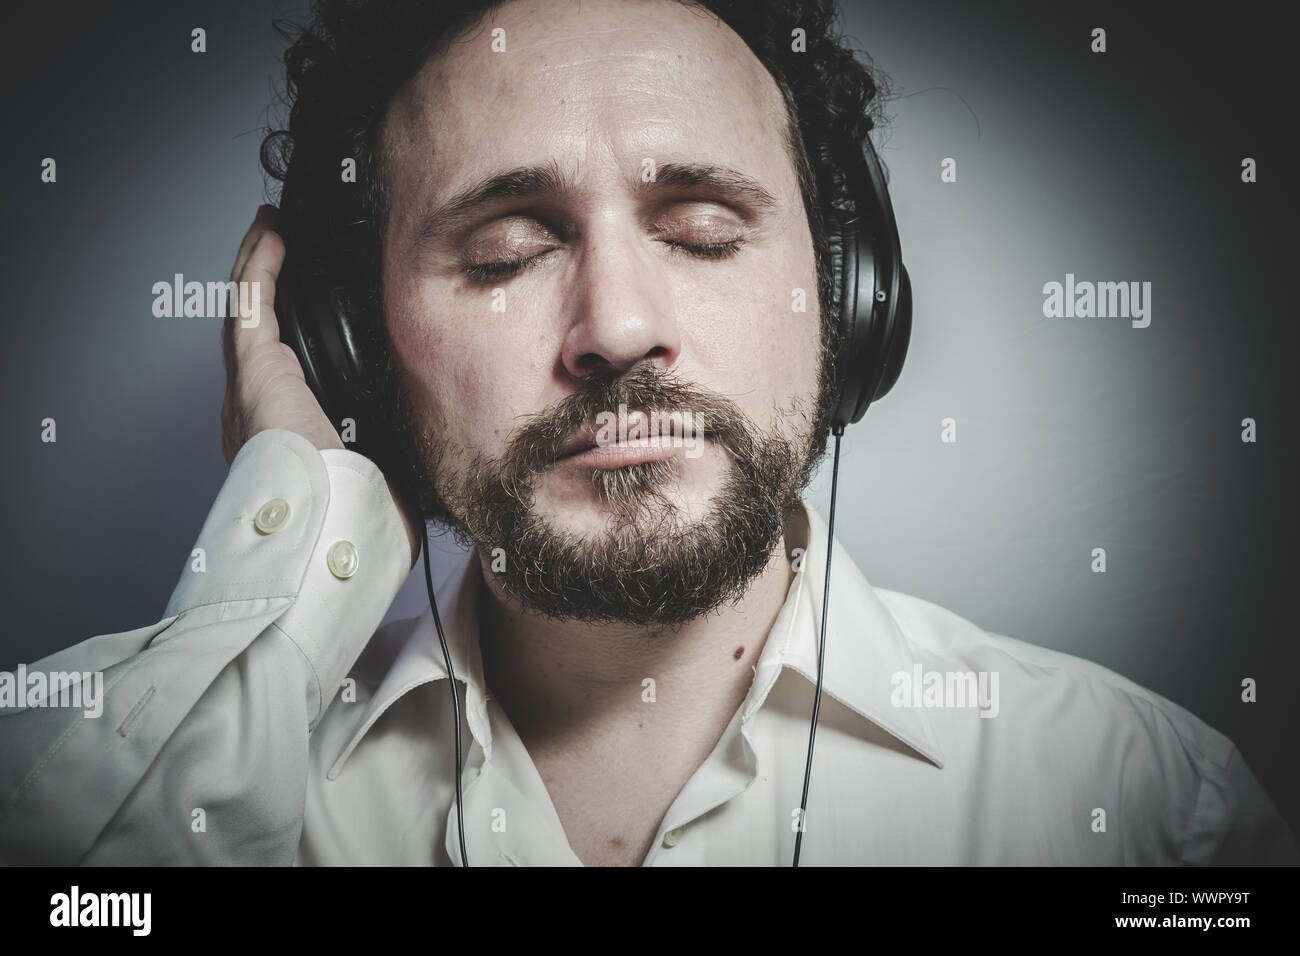 enjoy the music, man with intense expression, white shirt Stock Photo